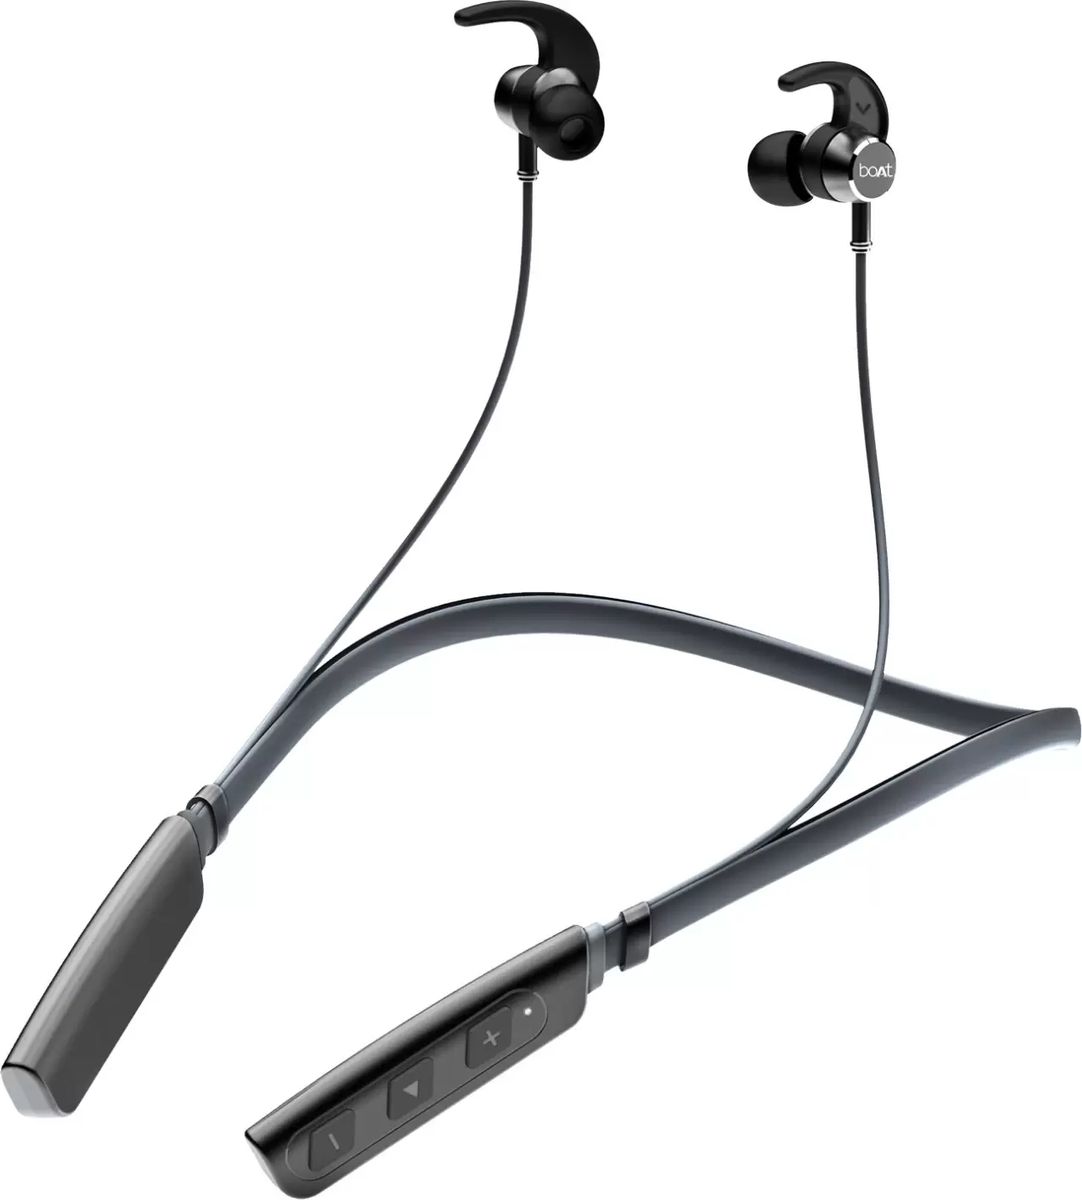 Boat Rockerz 235v2 Bluetooth Headset Best Price In India 21 Specs Review Smartprix